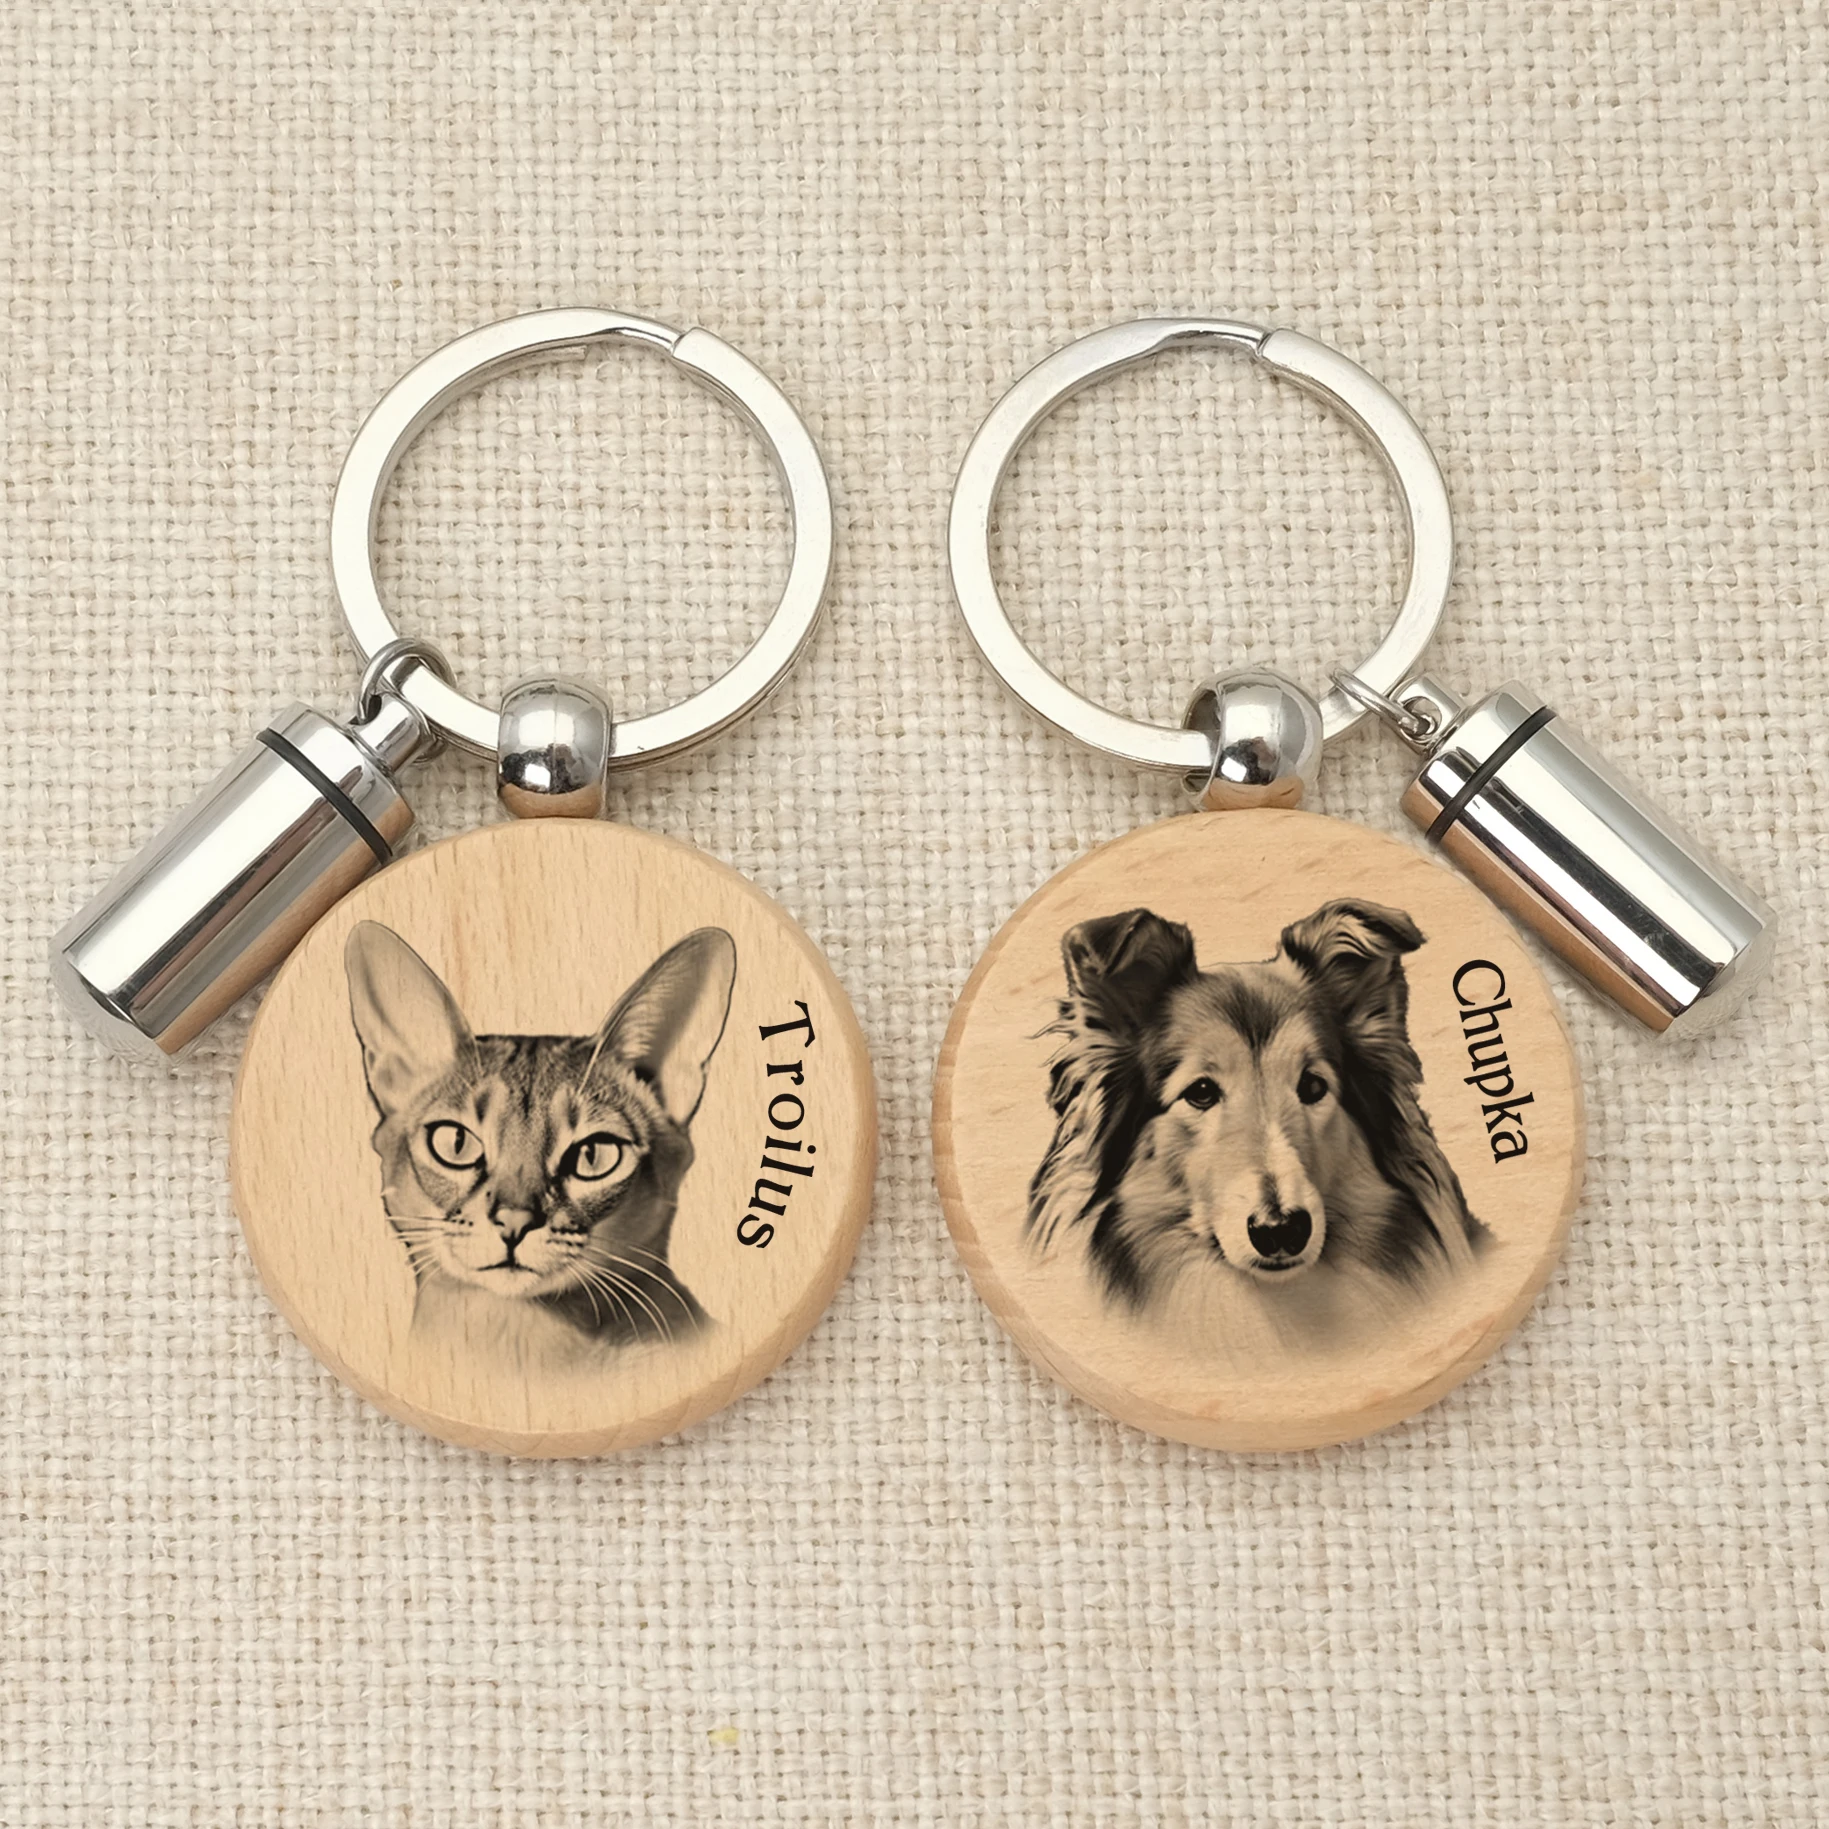 Personalised Dog Photo Key Chain Pet Urn Keychain Pet Photo Keychain Pet Memorial Gift Cat Portrait Keychain Wooden Urn Keyring